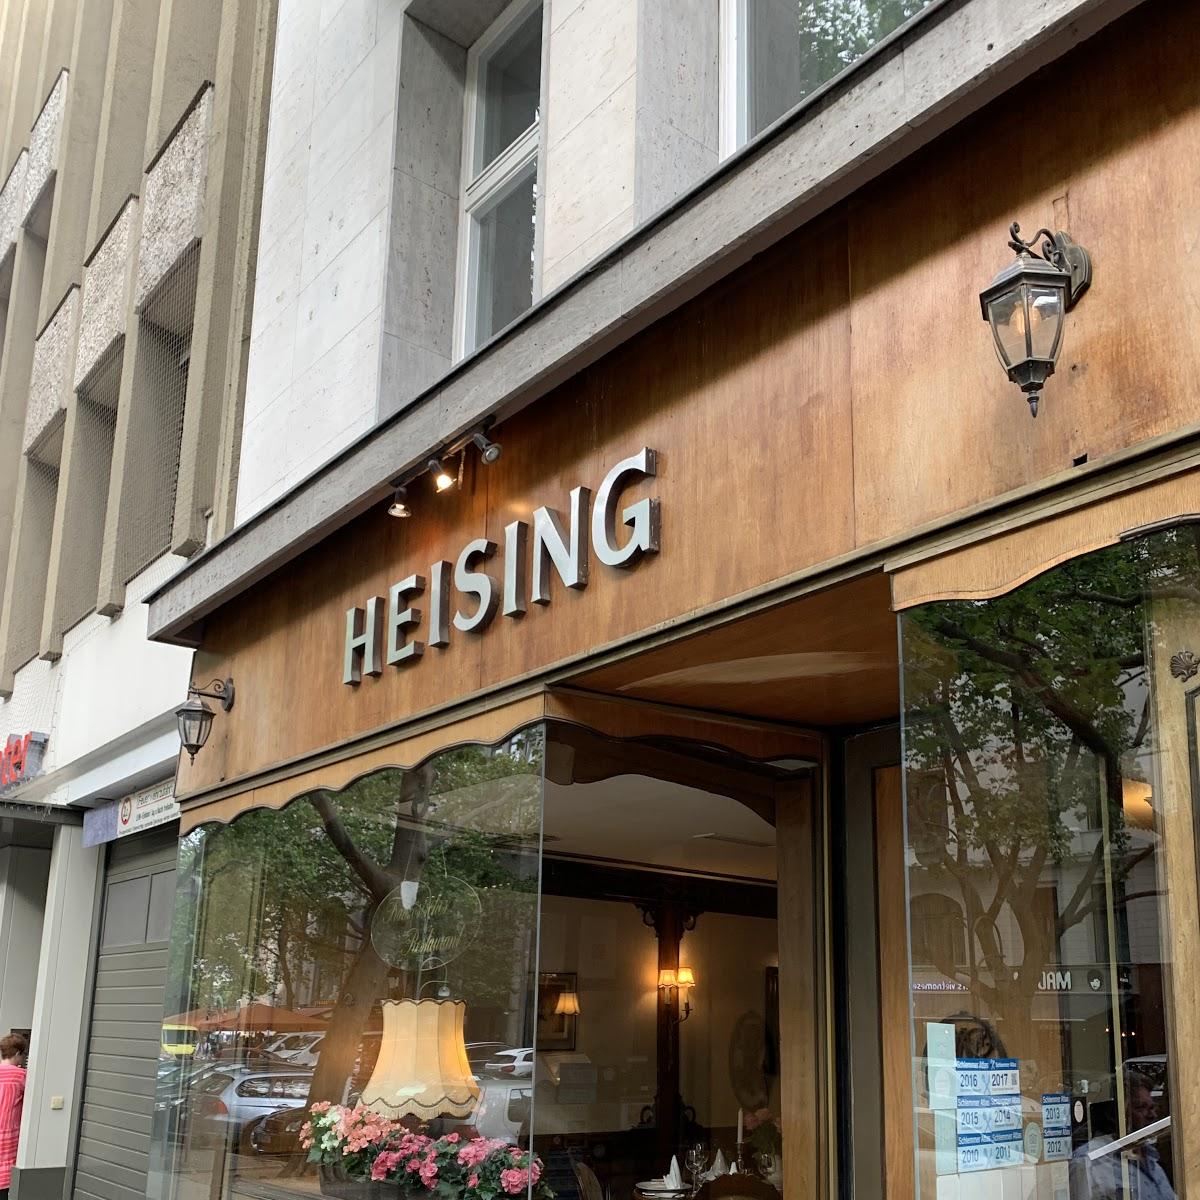 Restaurant "Heising" in  Berlin